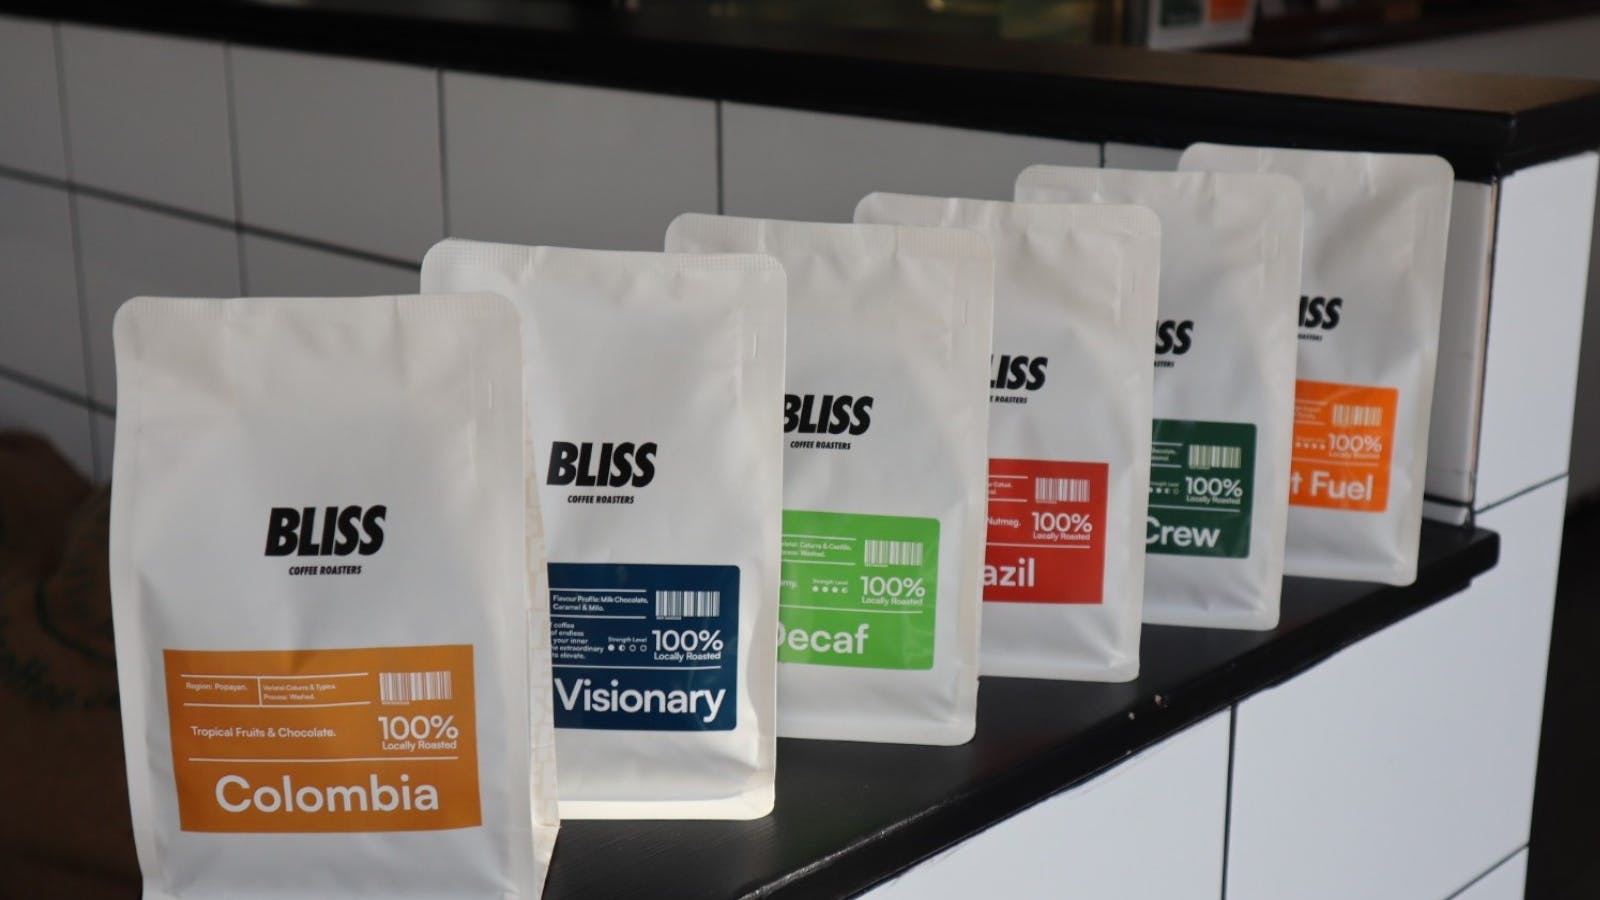 Bliss Coffee Roasters